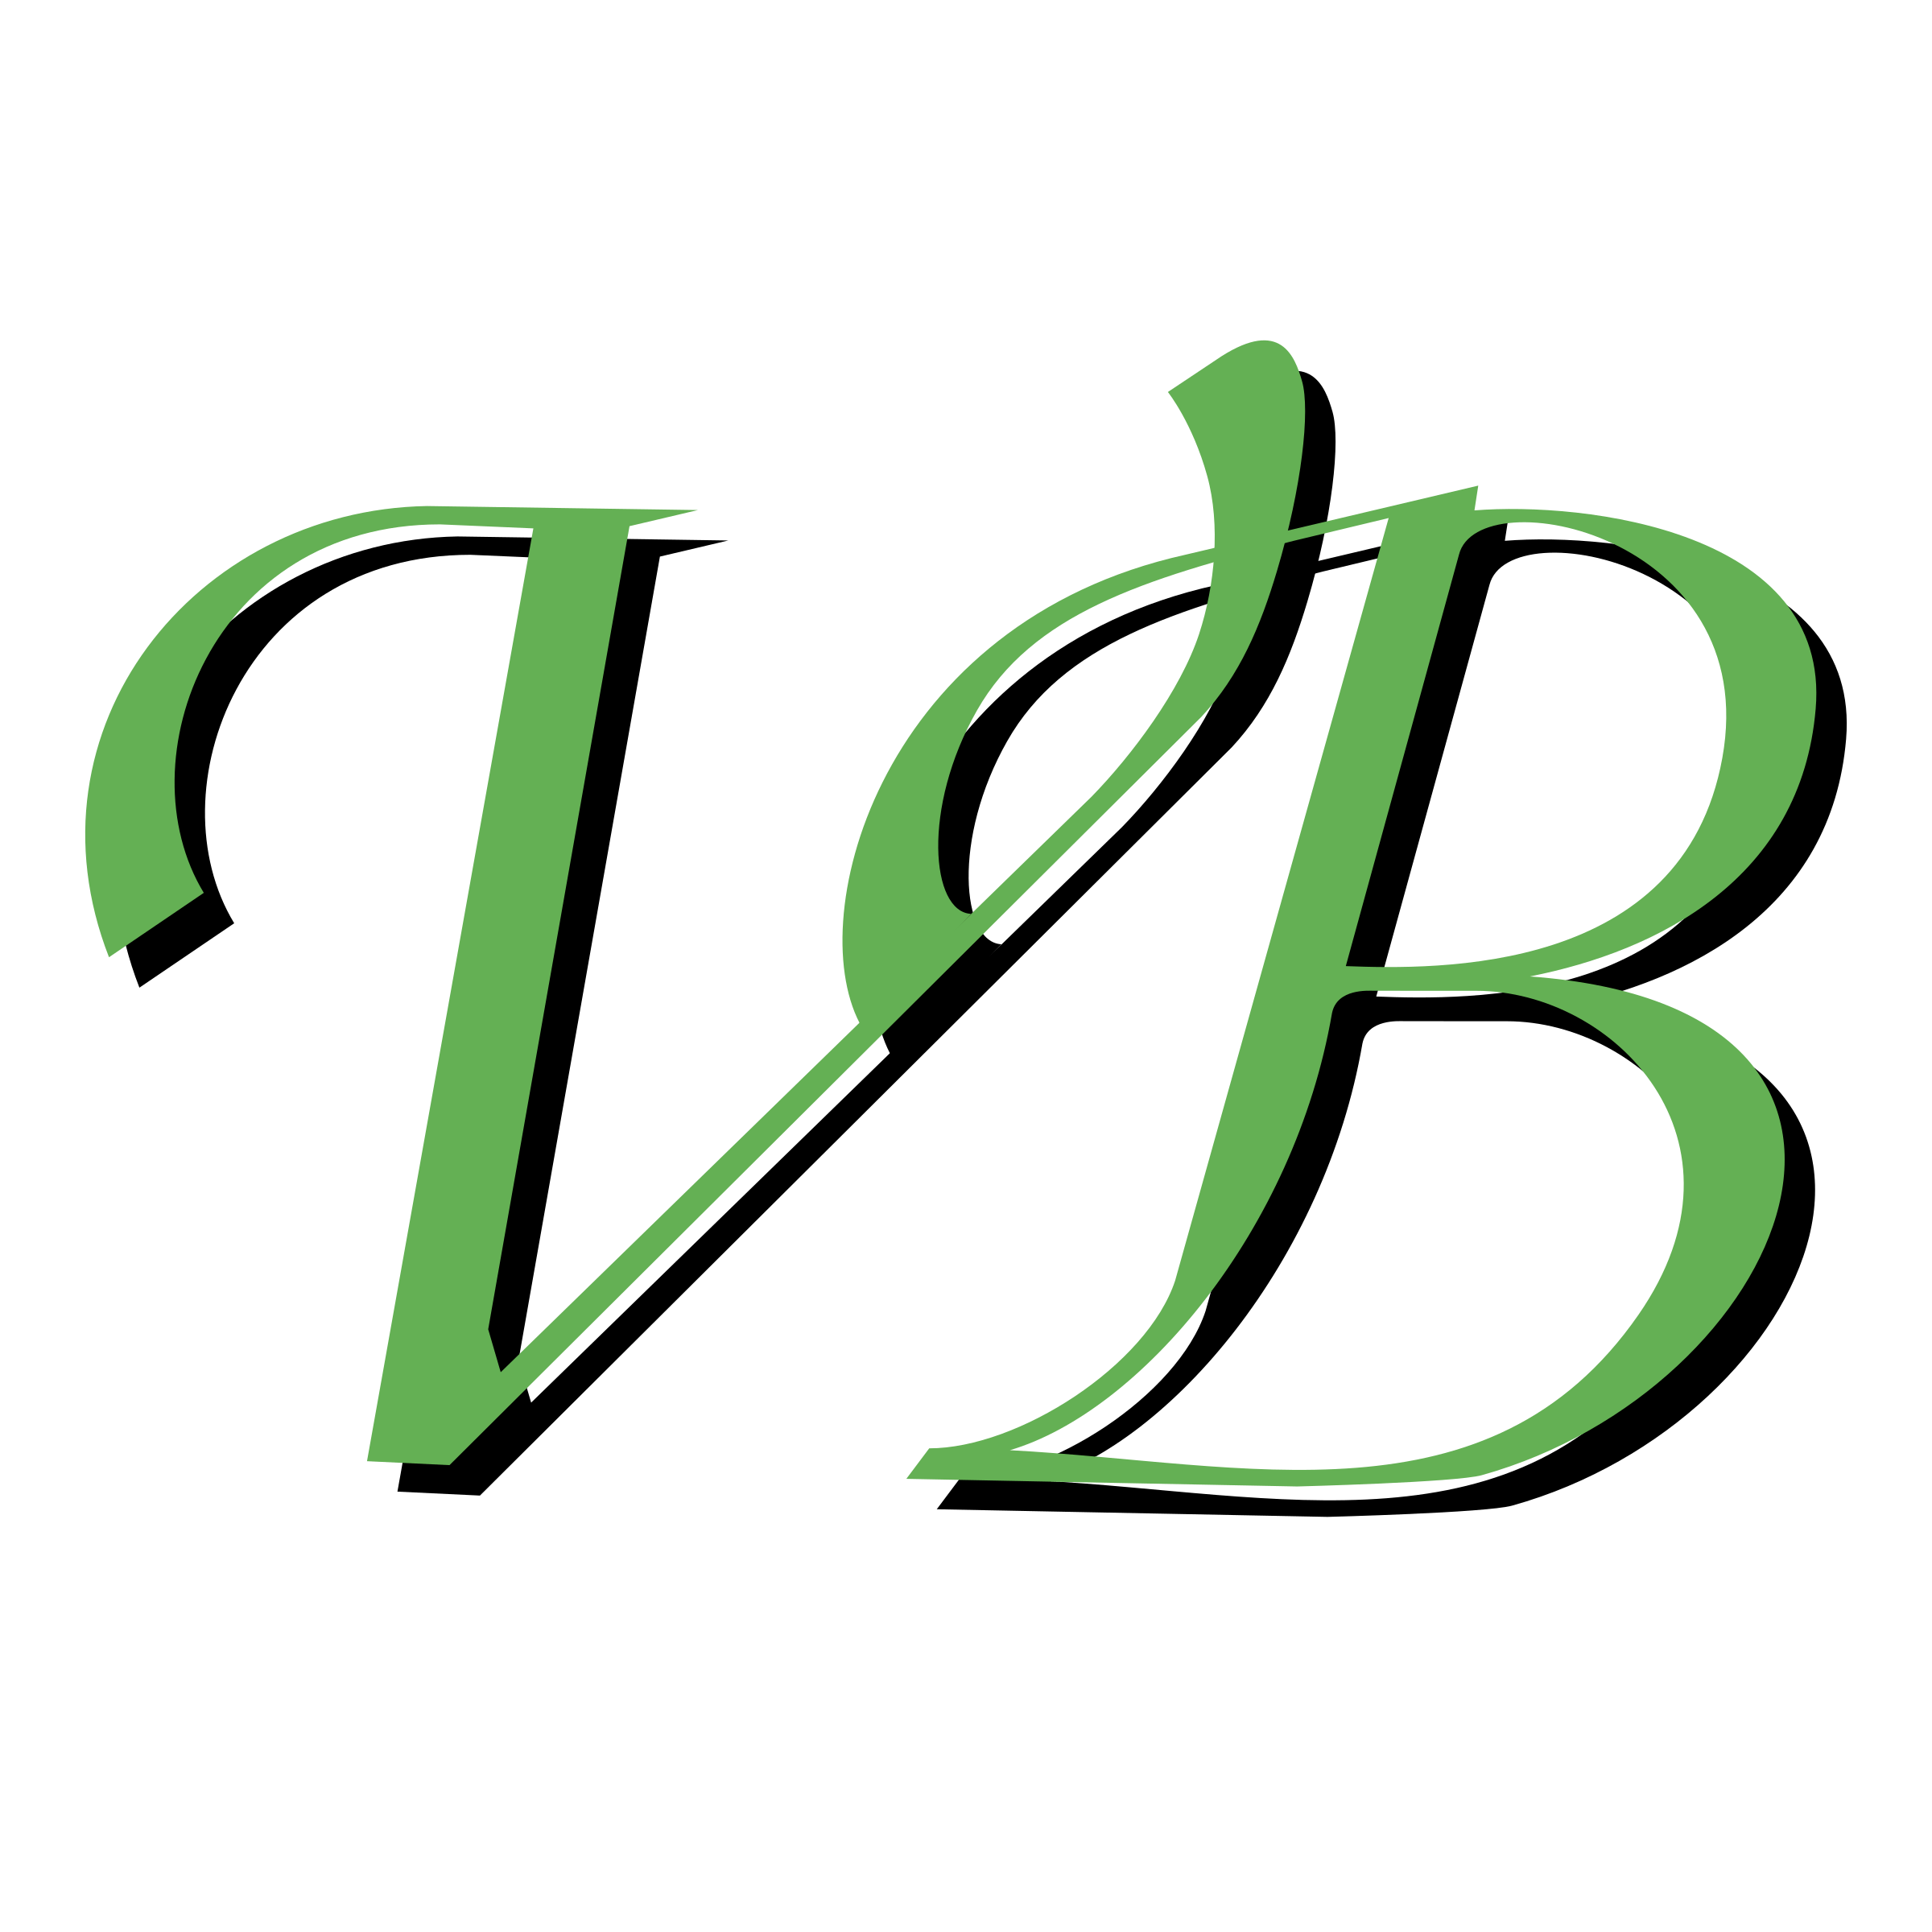 VB Logo - VB Logo PNG Transparent & SVG Vector - Freebie Supply